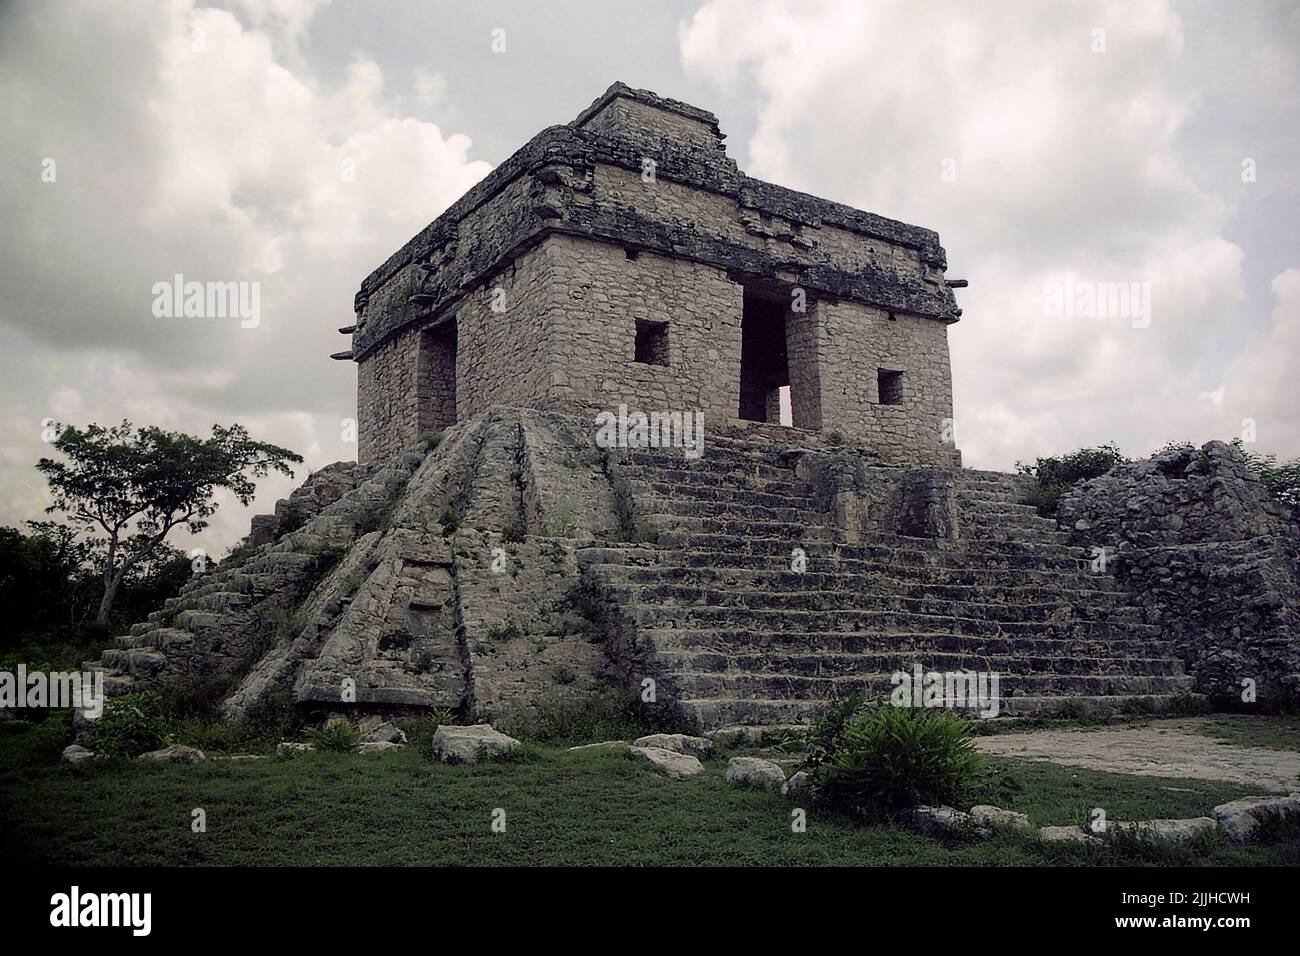 Temple of Seven Dolls in Dzibilchaltun, Mayan ruins north of Merida, Yucatan, Mexico Stock Photo